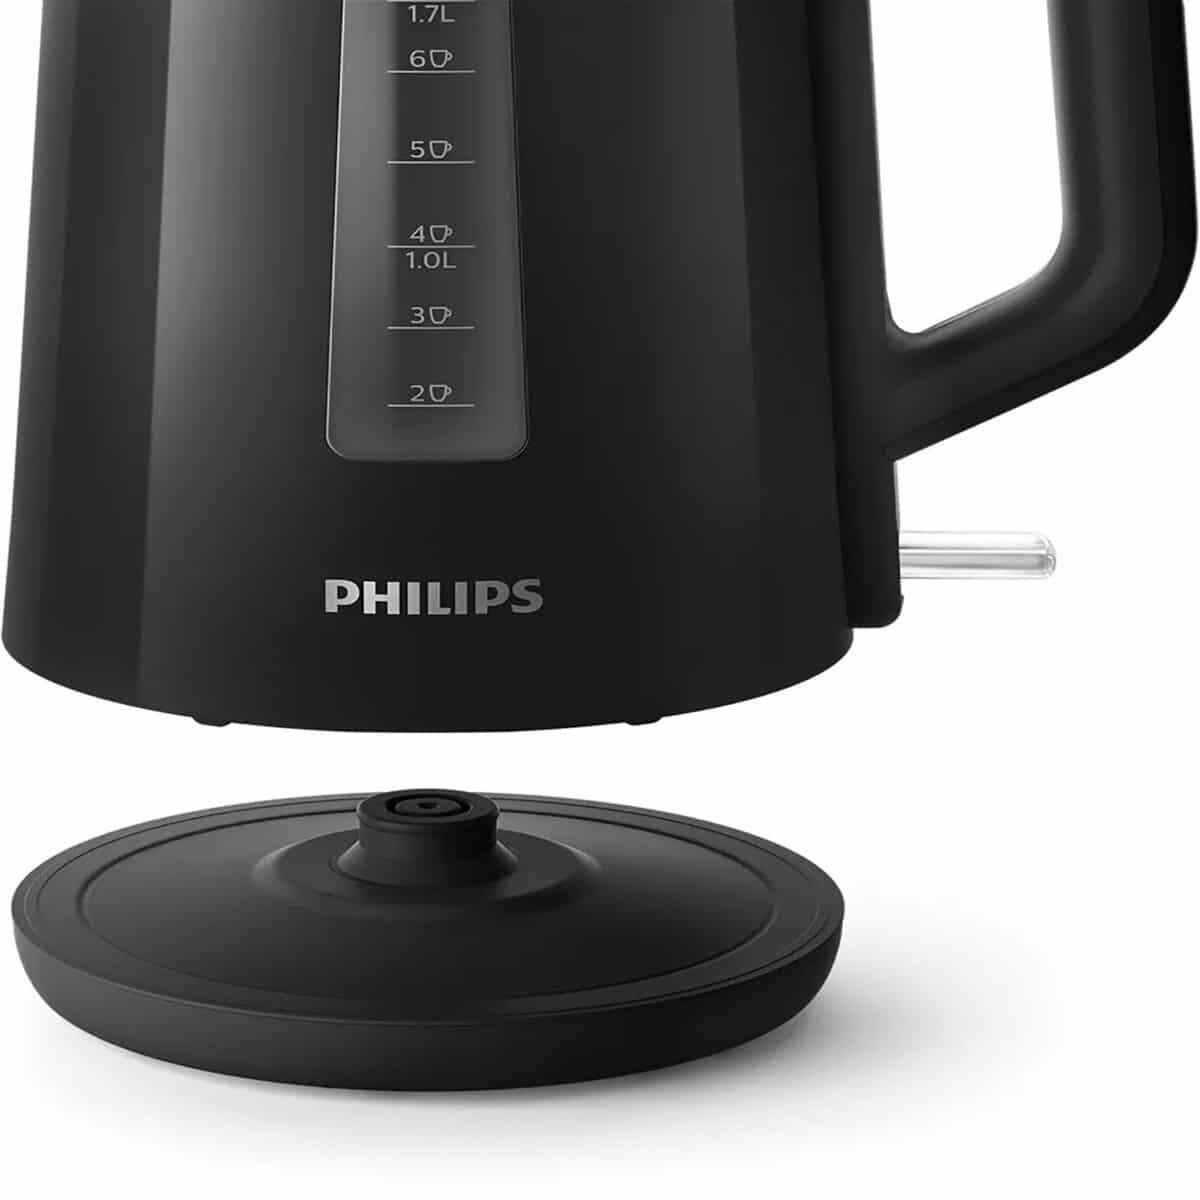 Philips 1.7L Kettle – HD9318/21 Black